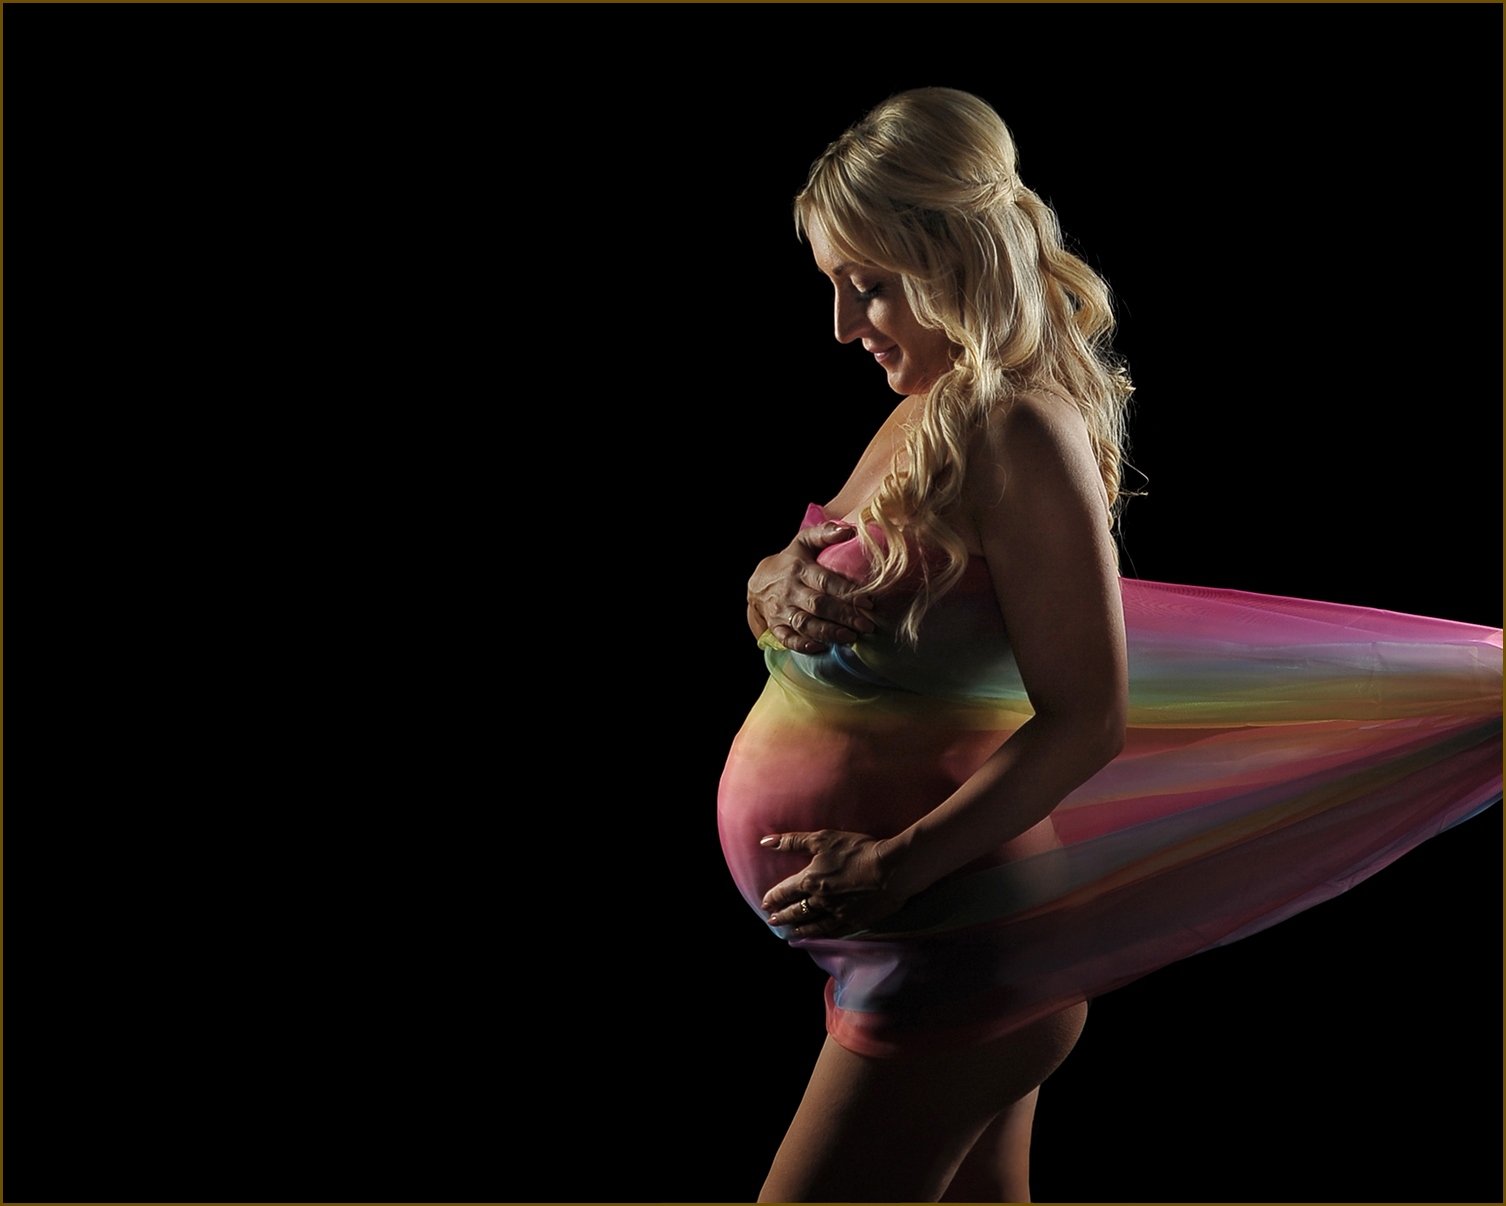 rainbow maternity image captured by Darren Whiteley